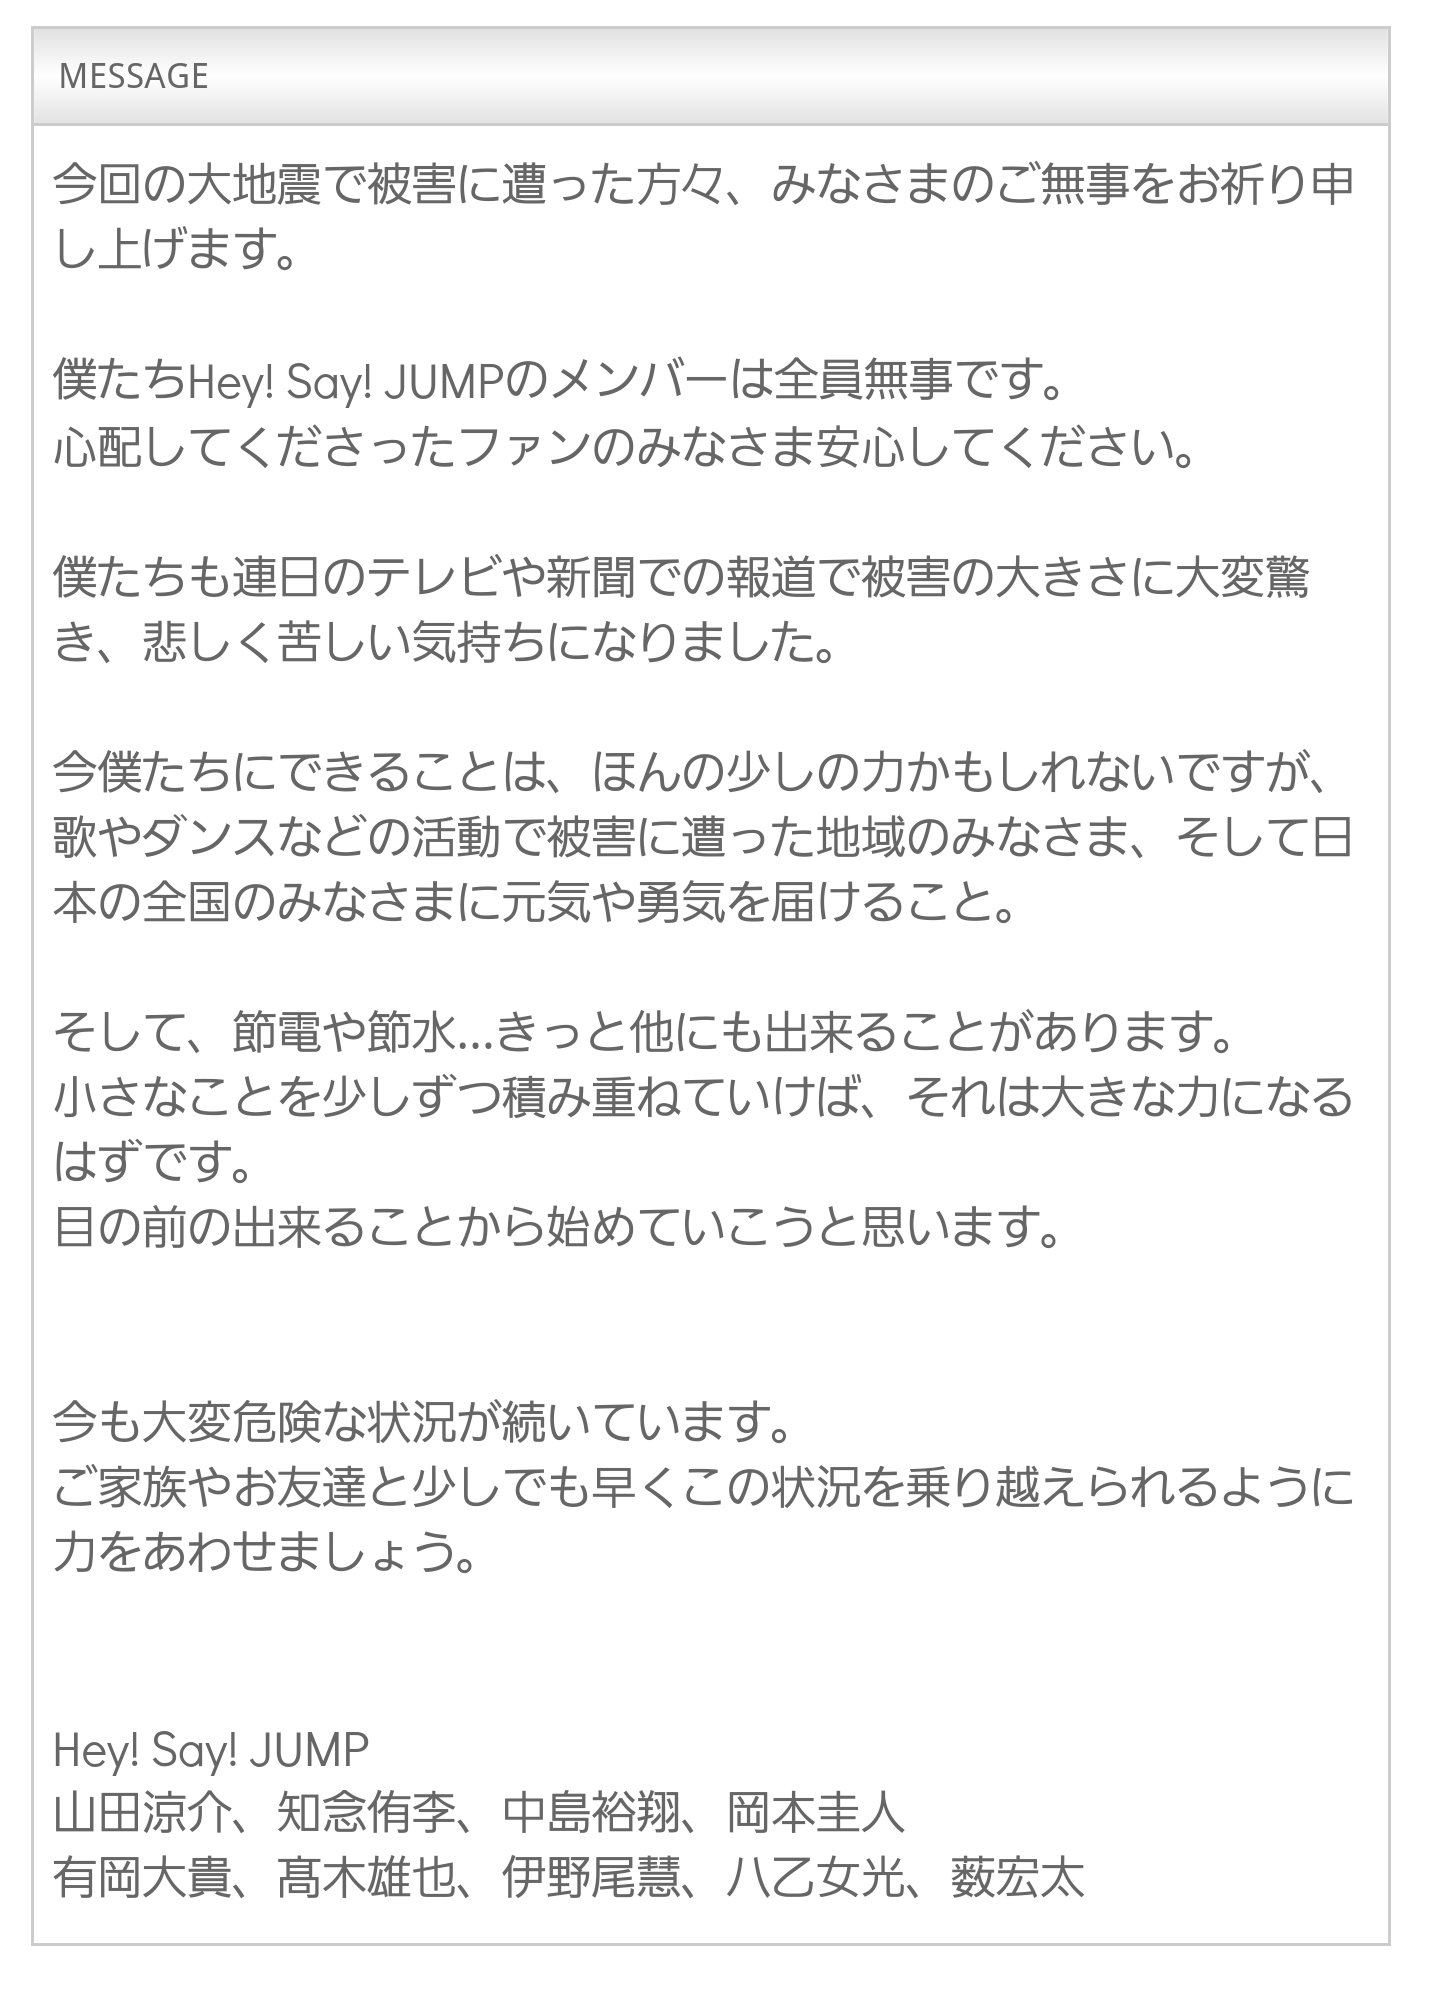 Hey Say Jump名言集在twitter 上 Message 97 Hey Say Jump 熊本大地震で被害に遭った方々へ T Co Ysd7z7pmxm Twitter